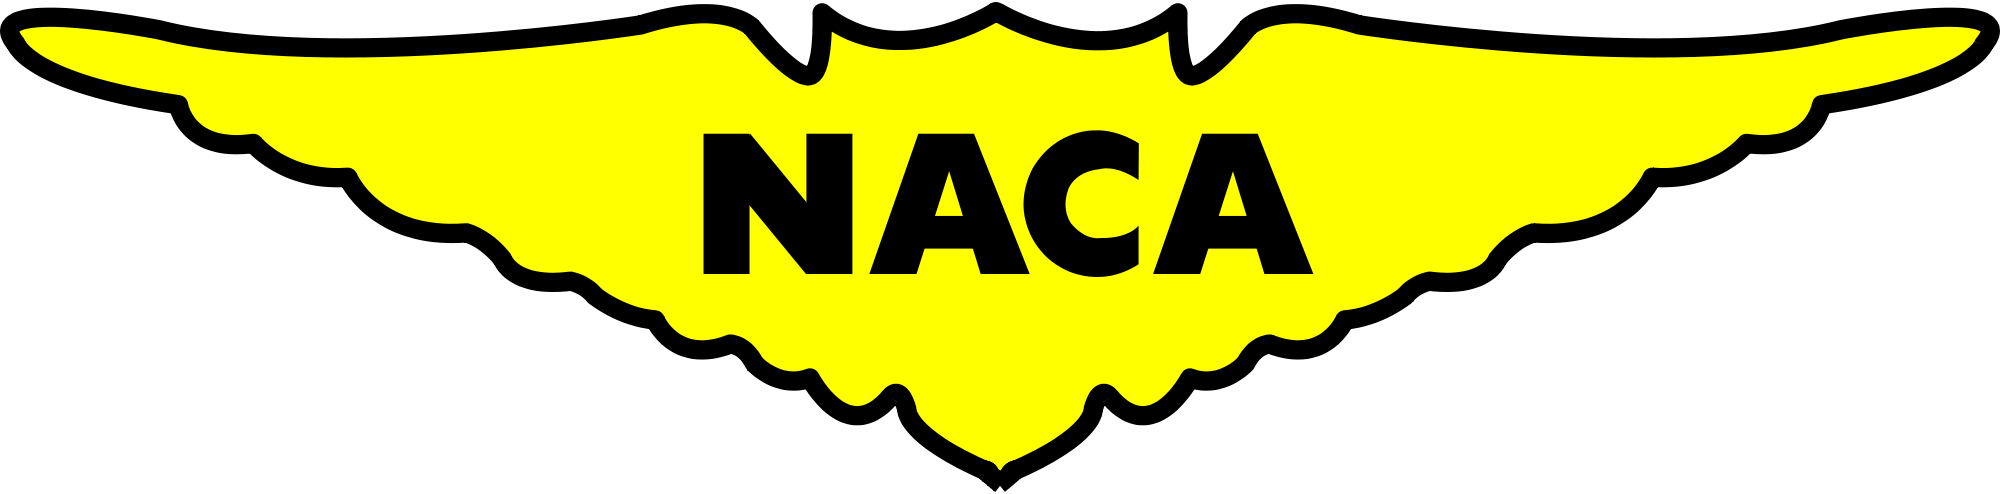 NACA Logo - US NACA Logo.svg